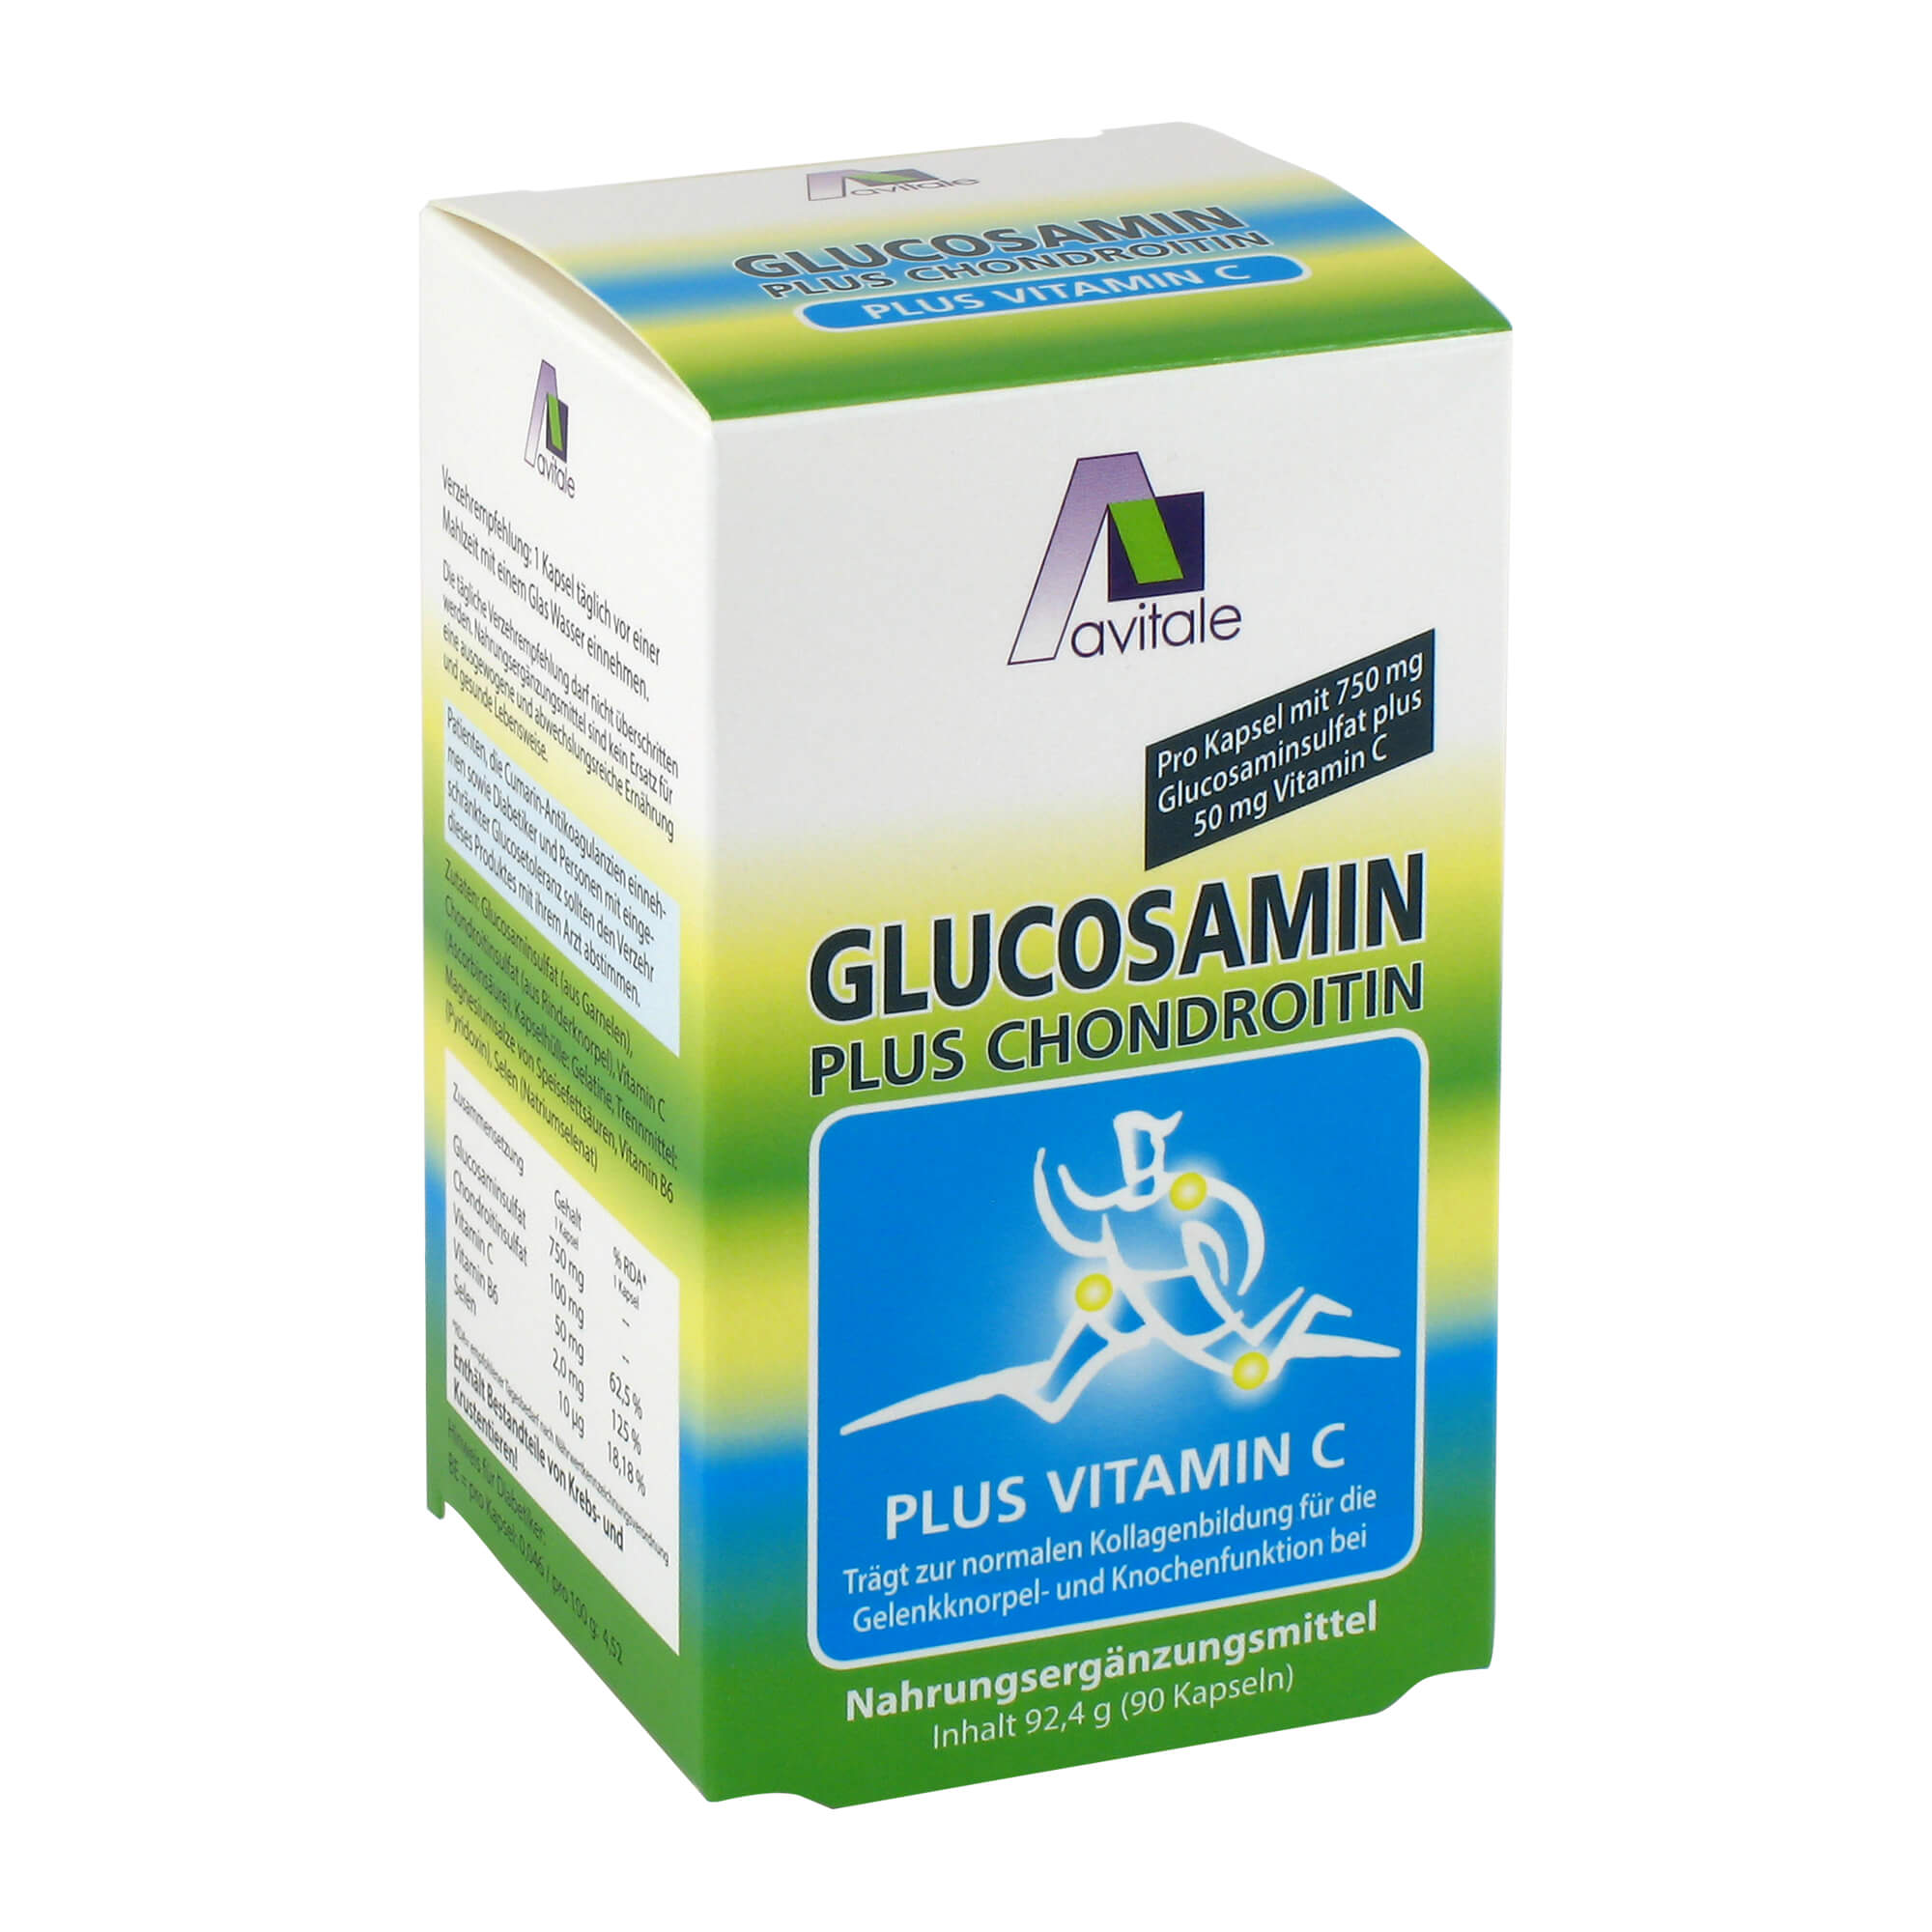 Nahrungsergänzungsmittel mit 750 mg Glucosamin und 100 mg Chondroitin.